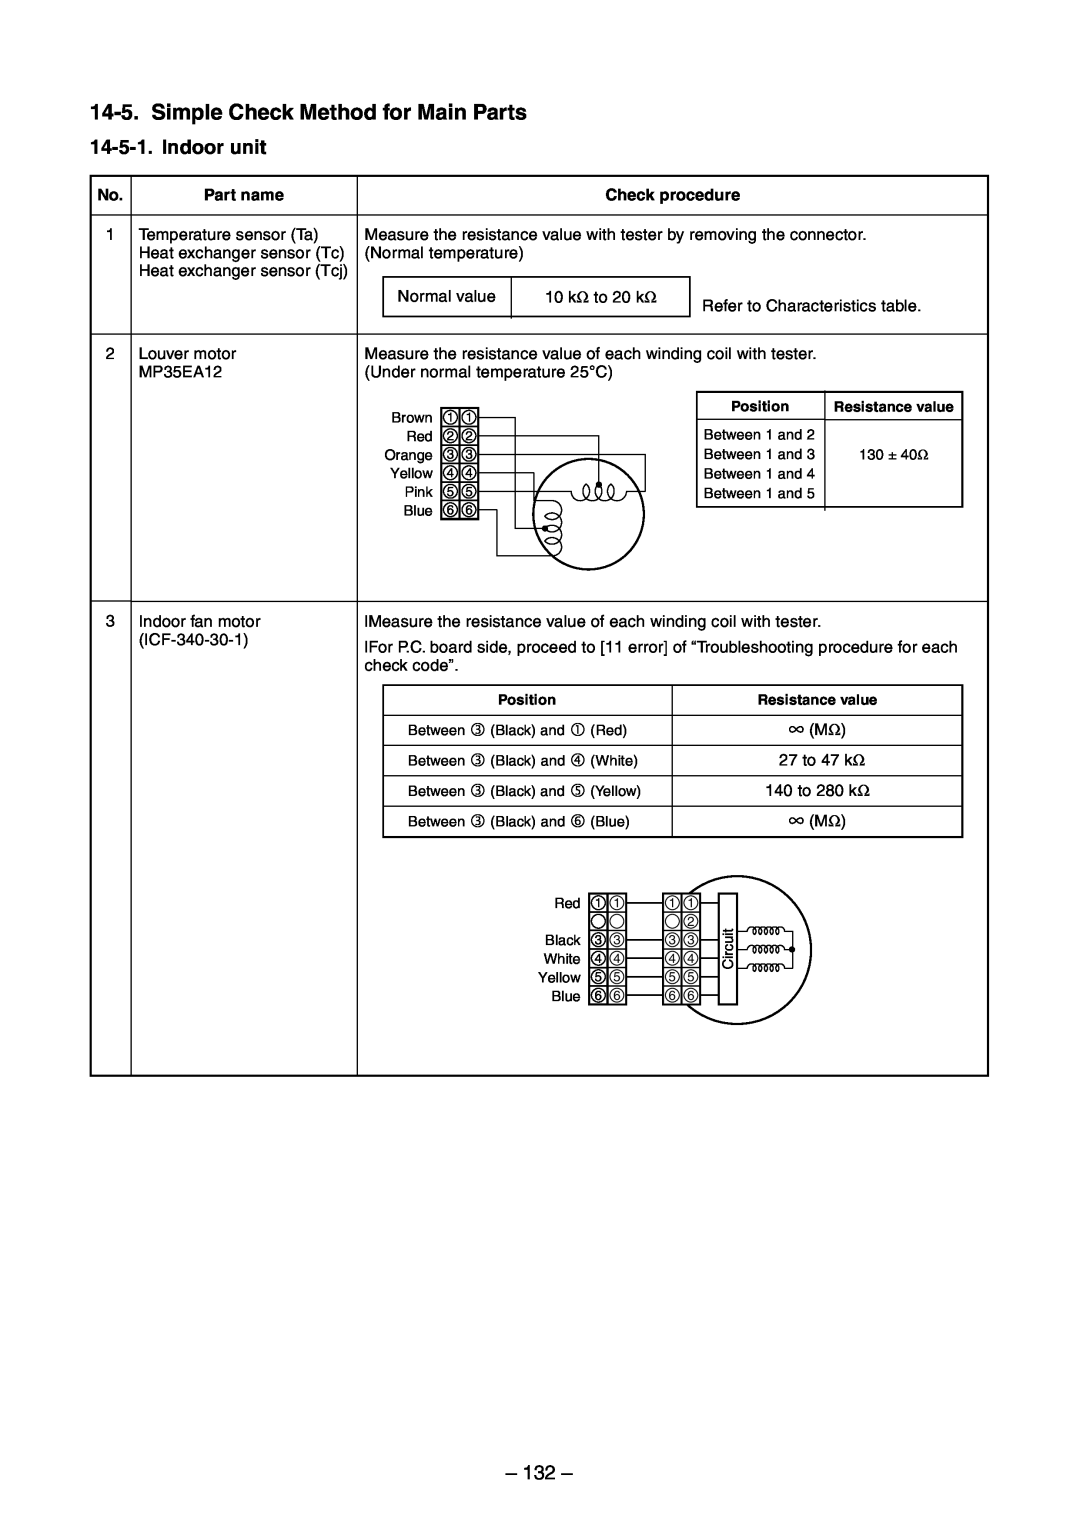 Toshiba RAV-SM800AT-E, RAV-SM800UT-E, RAV-SM560UT-E, RAV-SM560AT-E, RAV-SM560BT-E Simple Check Method for Main Parts, 132 